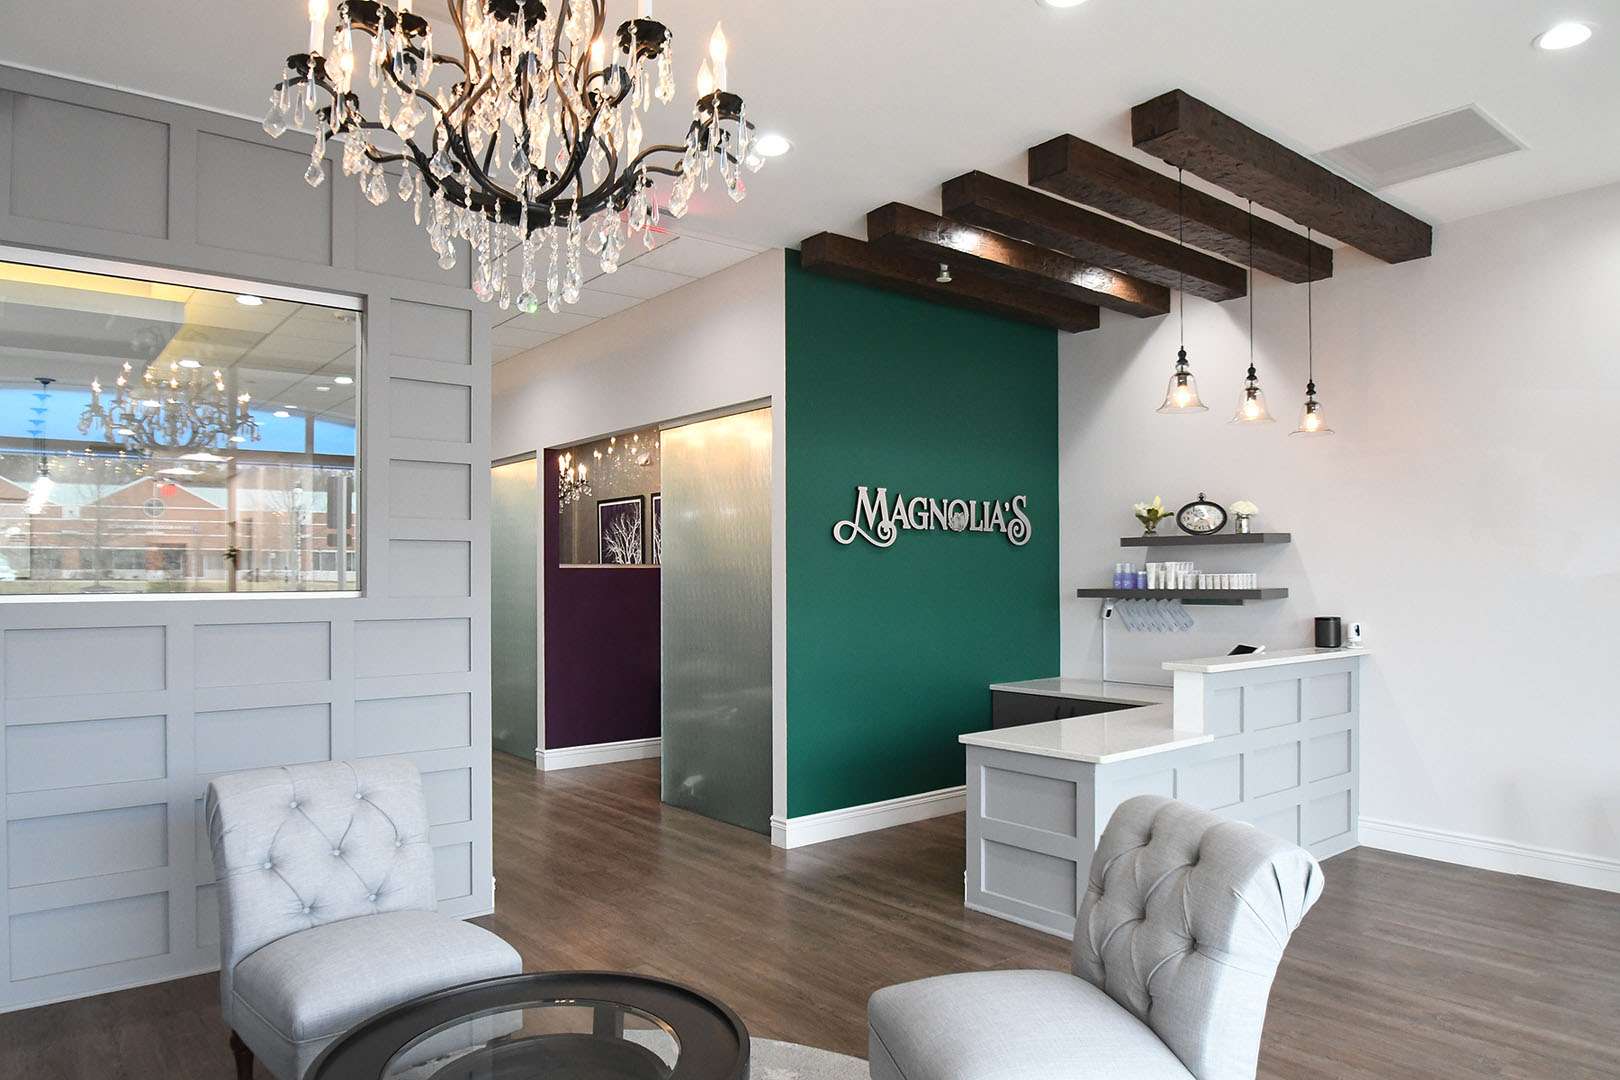 Magnolias nail salon | Interior Design Portfolio